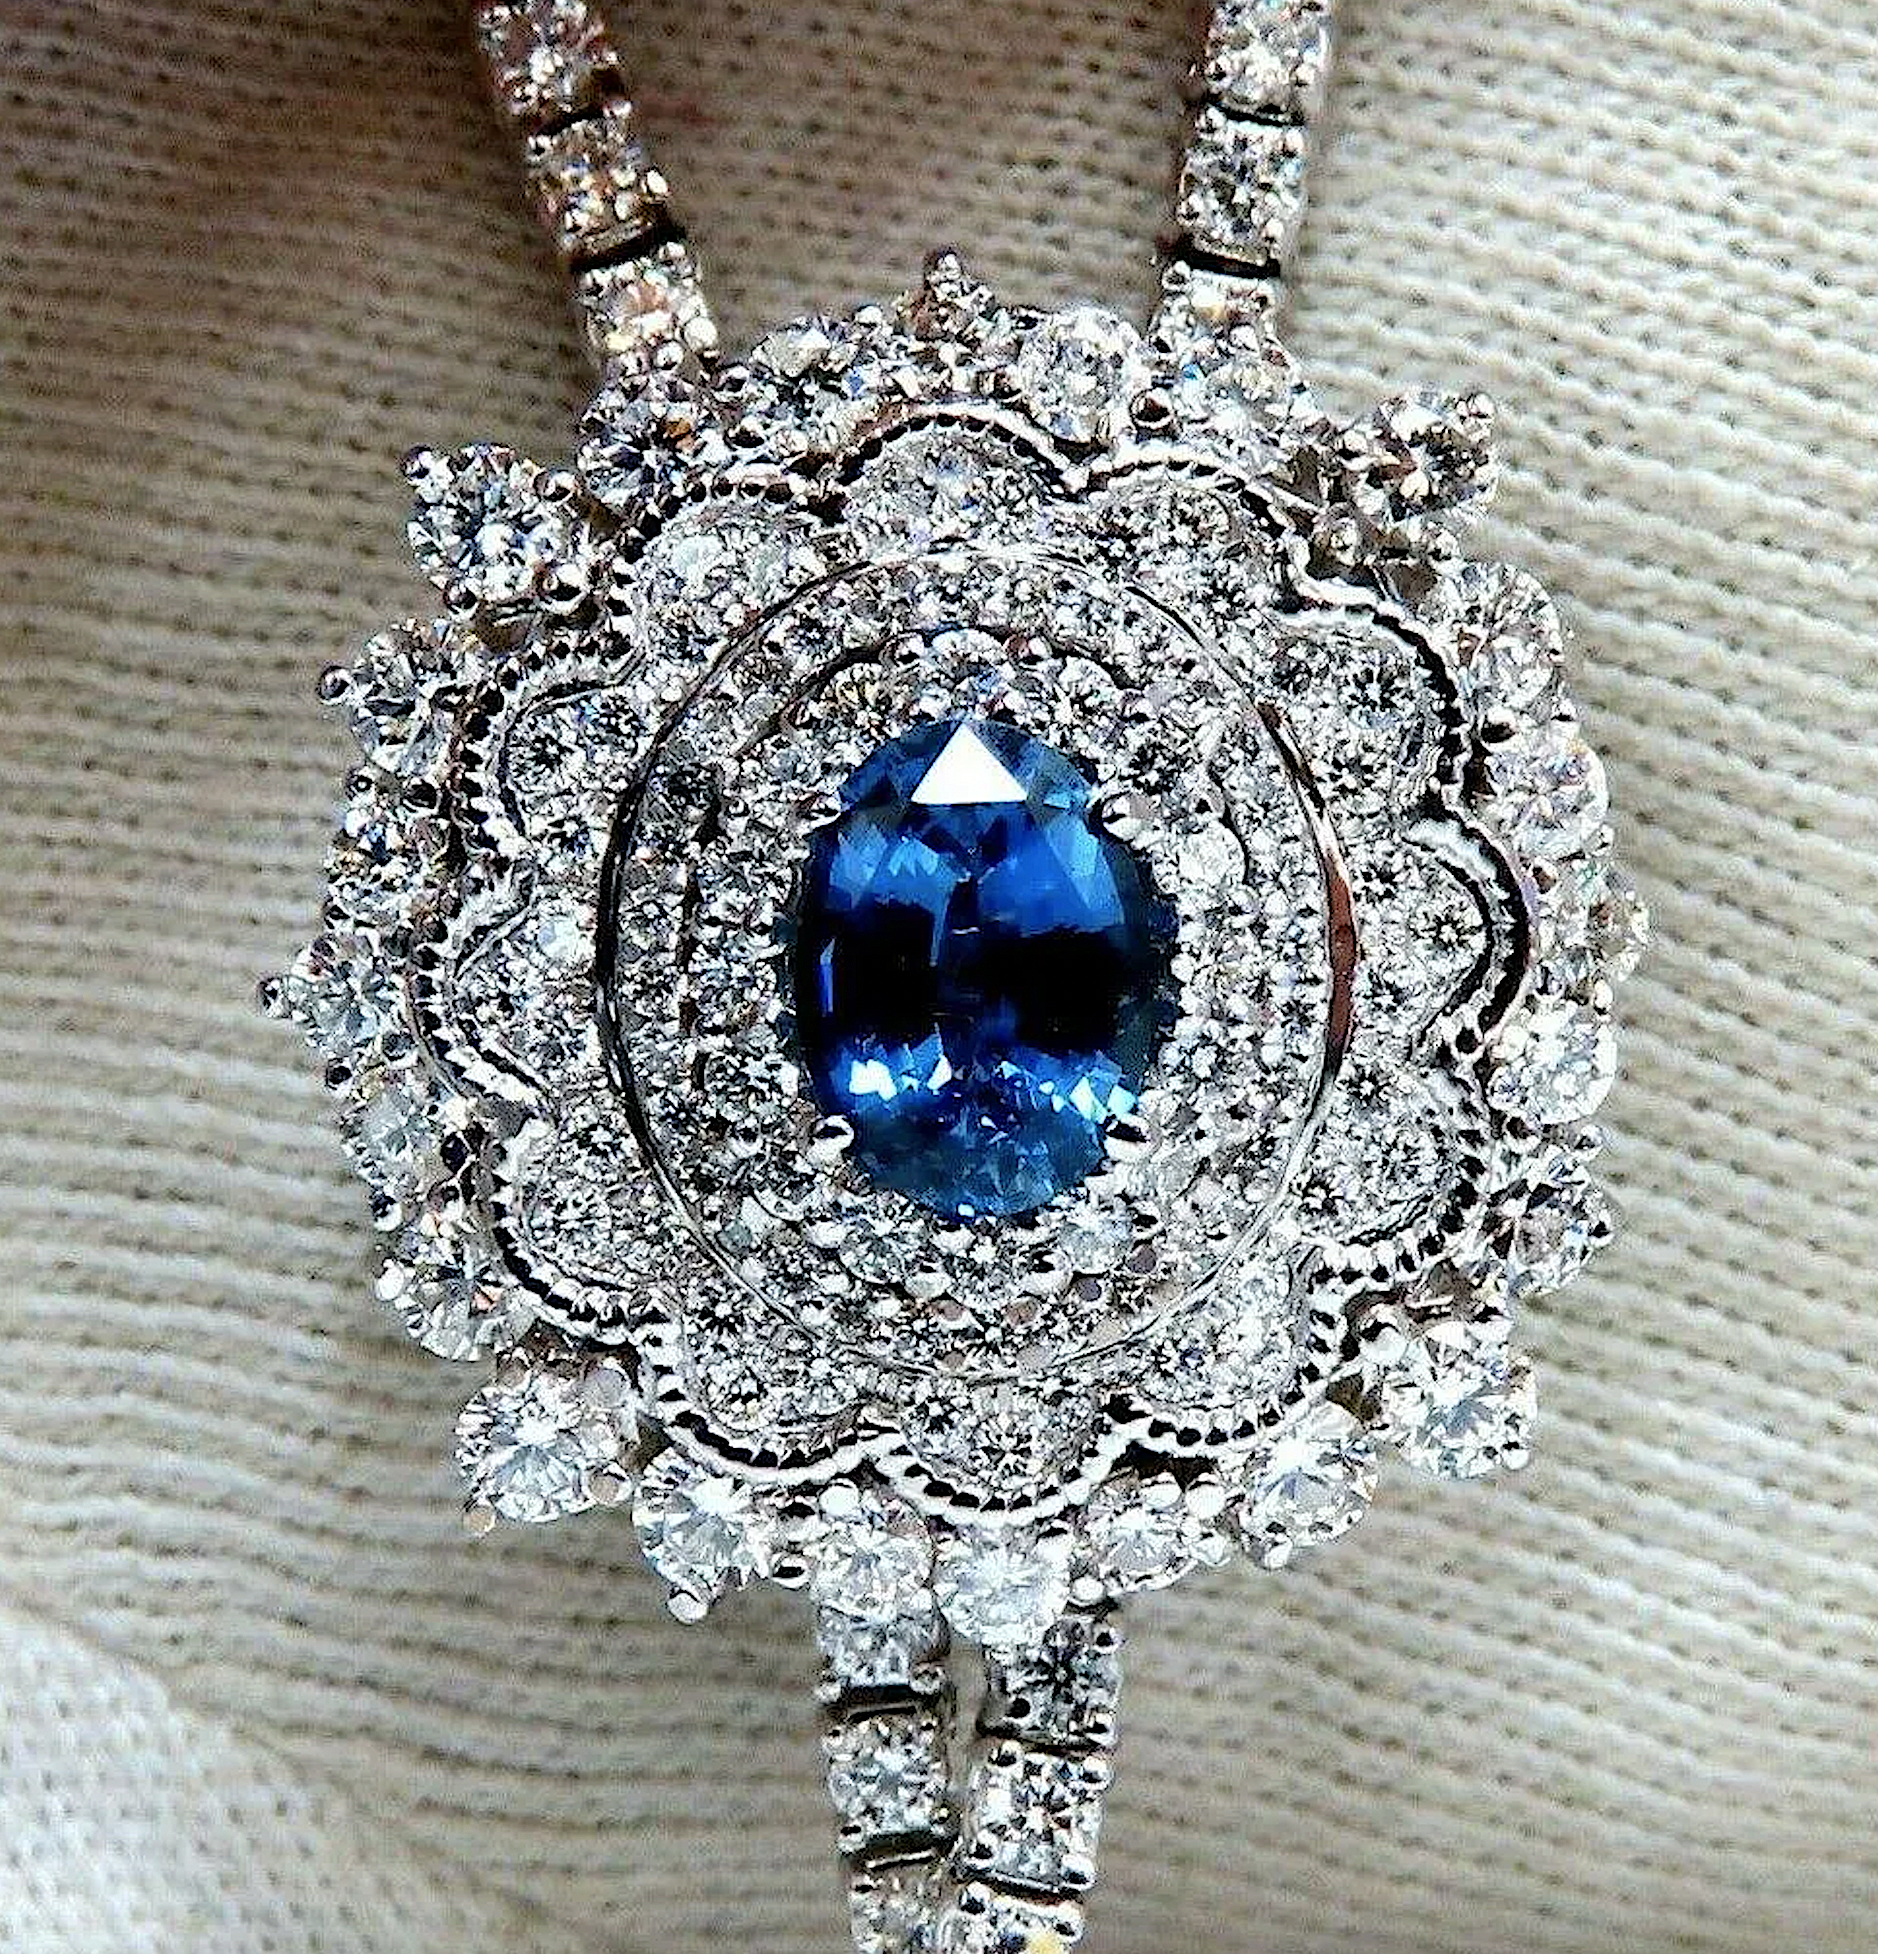 18K white gold, diamond and sapphire bolo cluster necklace, est. $32,000-$38,000